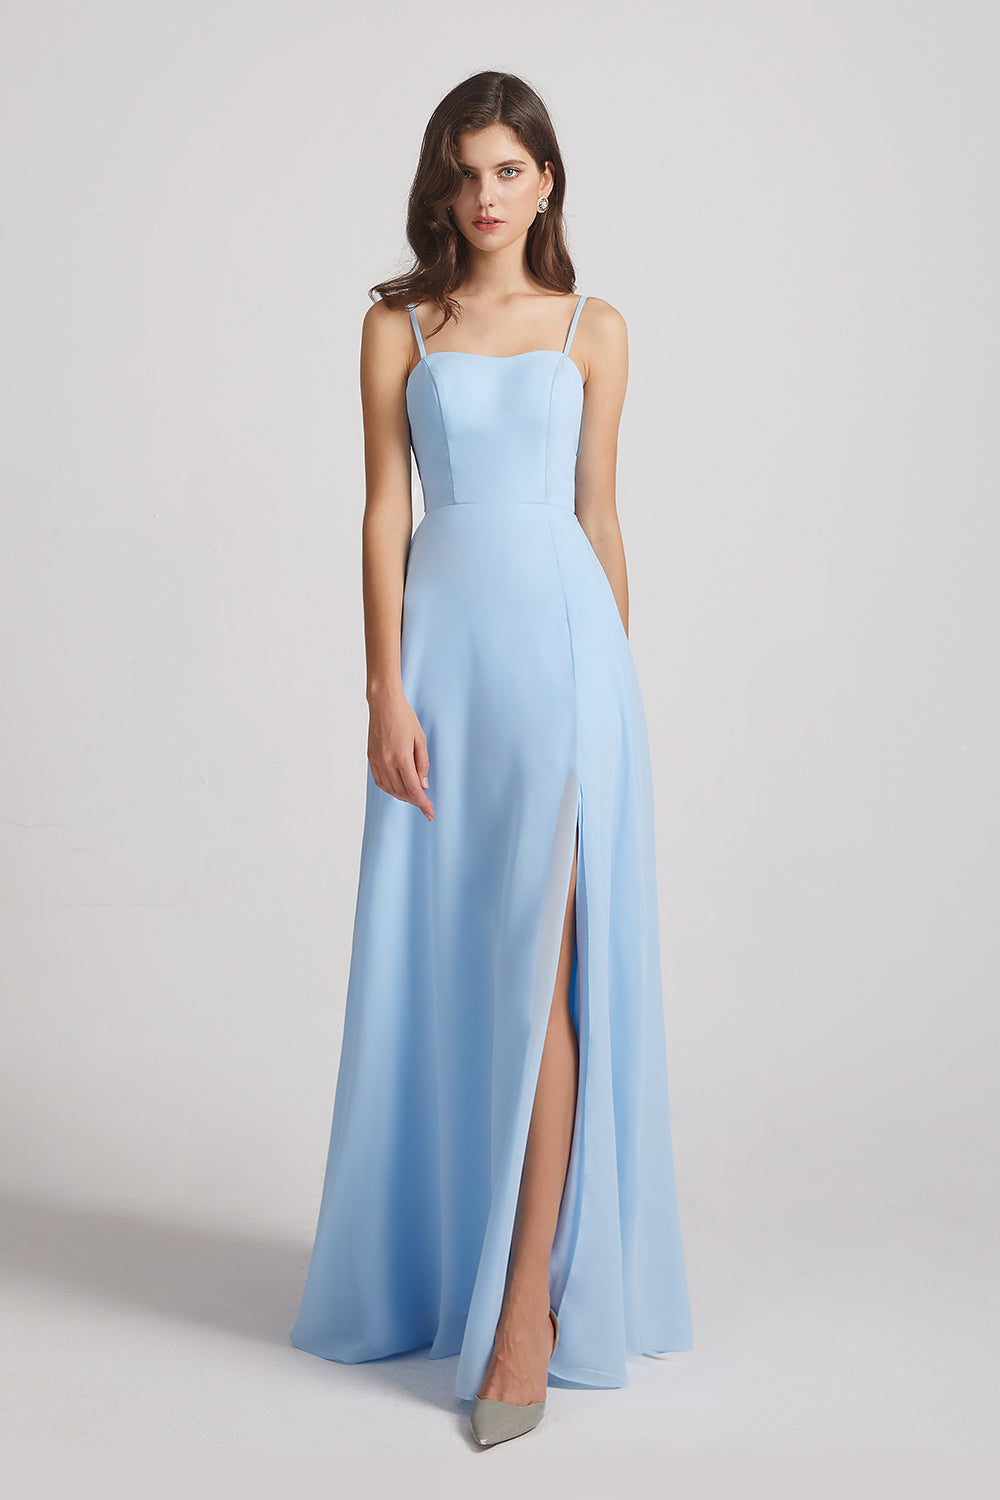 Alfa Bridal Light Sky Blue Spaghetti Straps Long Chiffon Bridesmaid Dresses with Side Slit (AF0112)